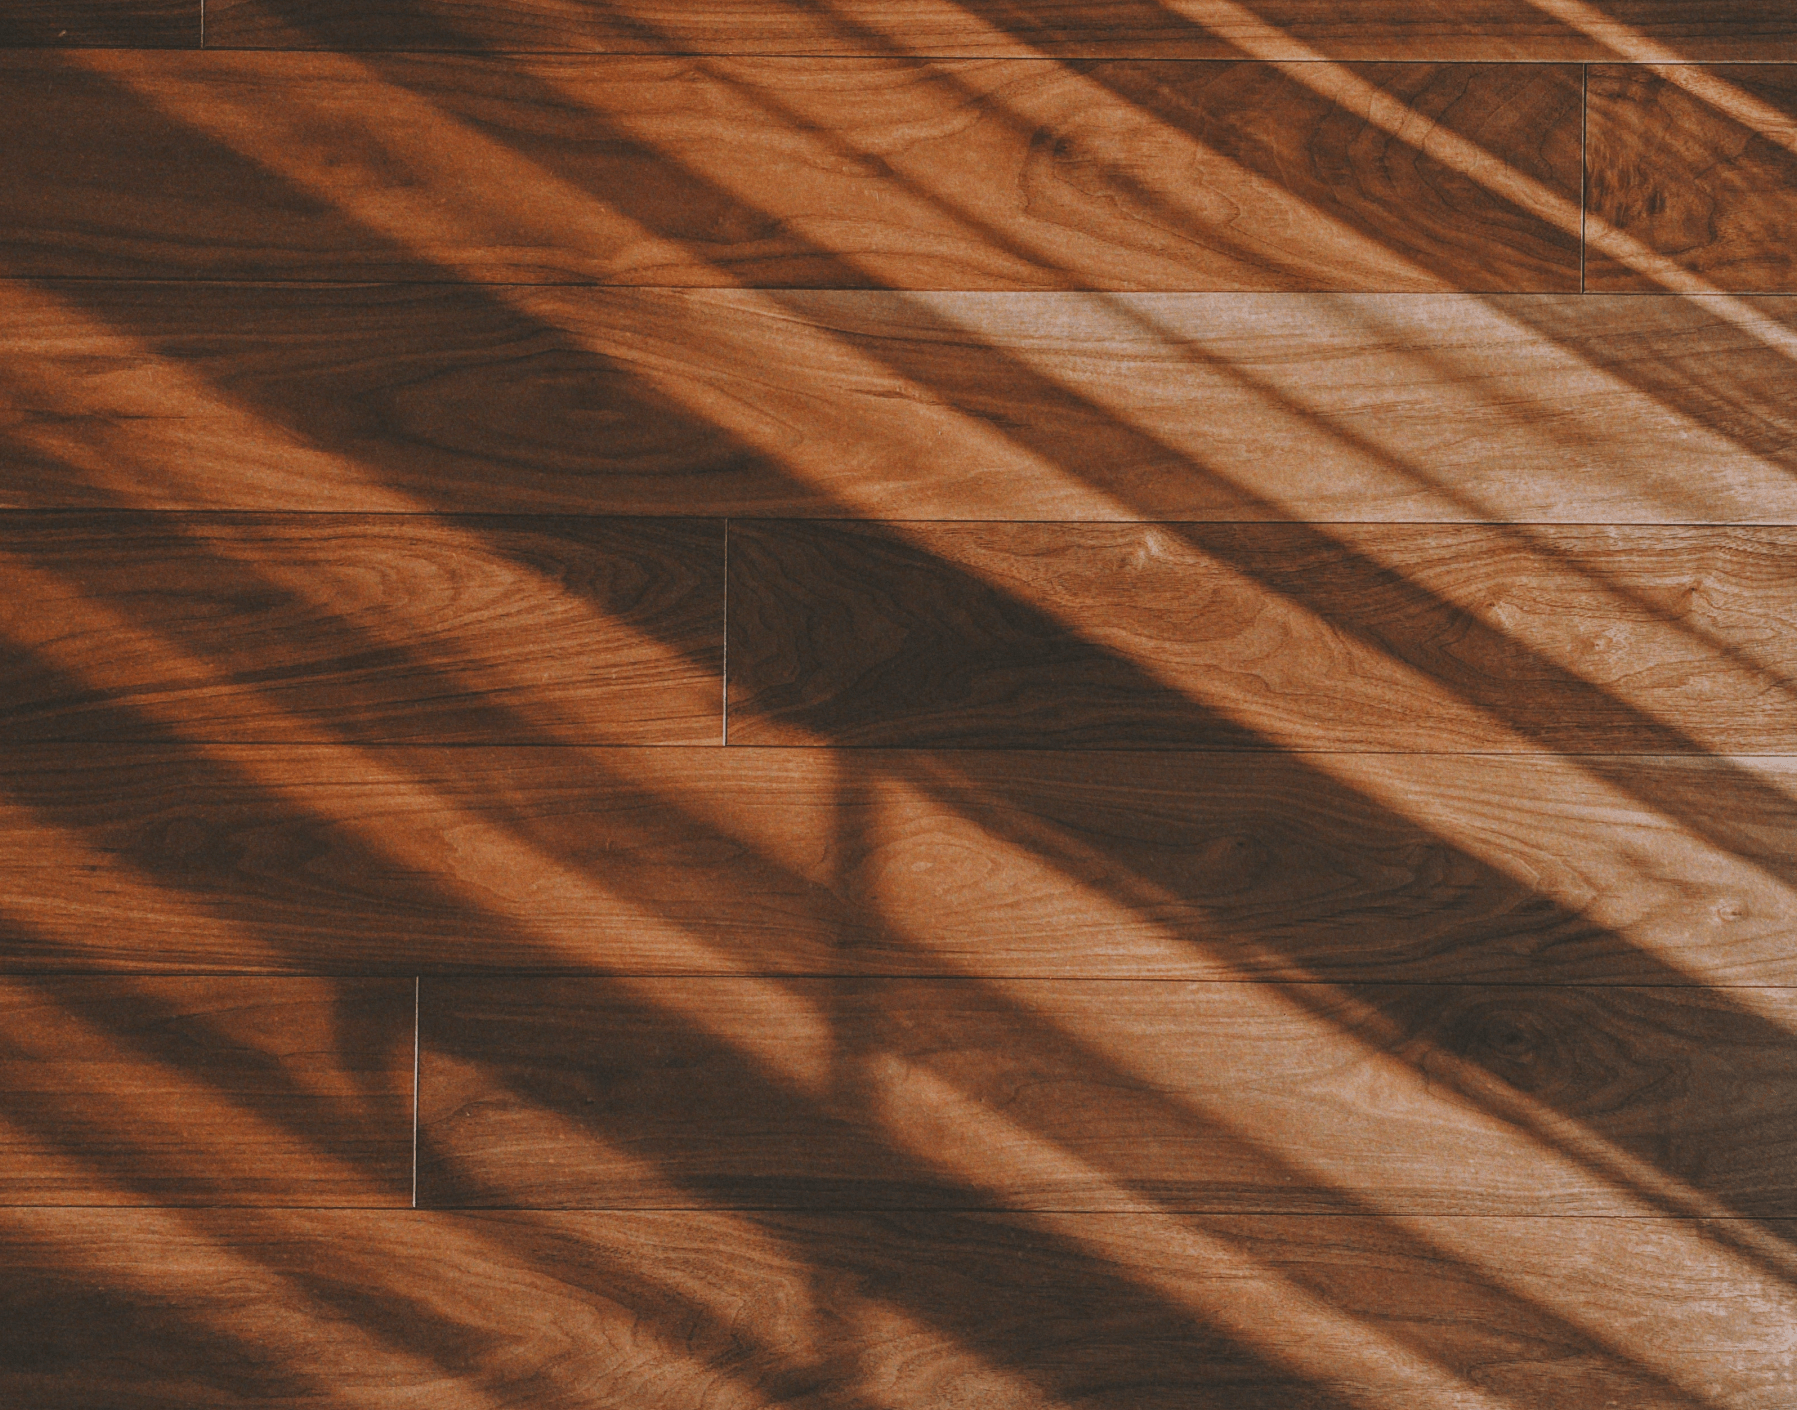 Warm toned hardwood flooring with cascading shadow